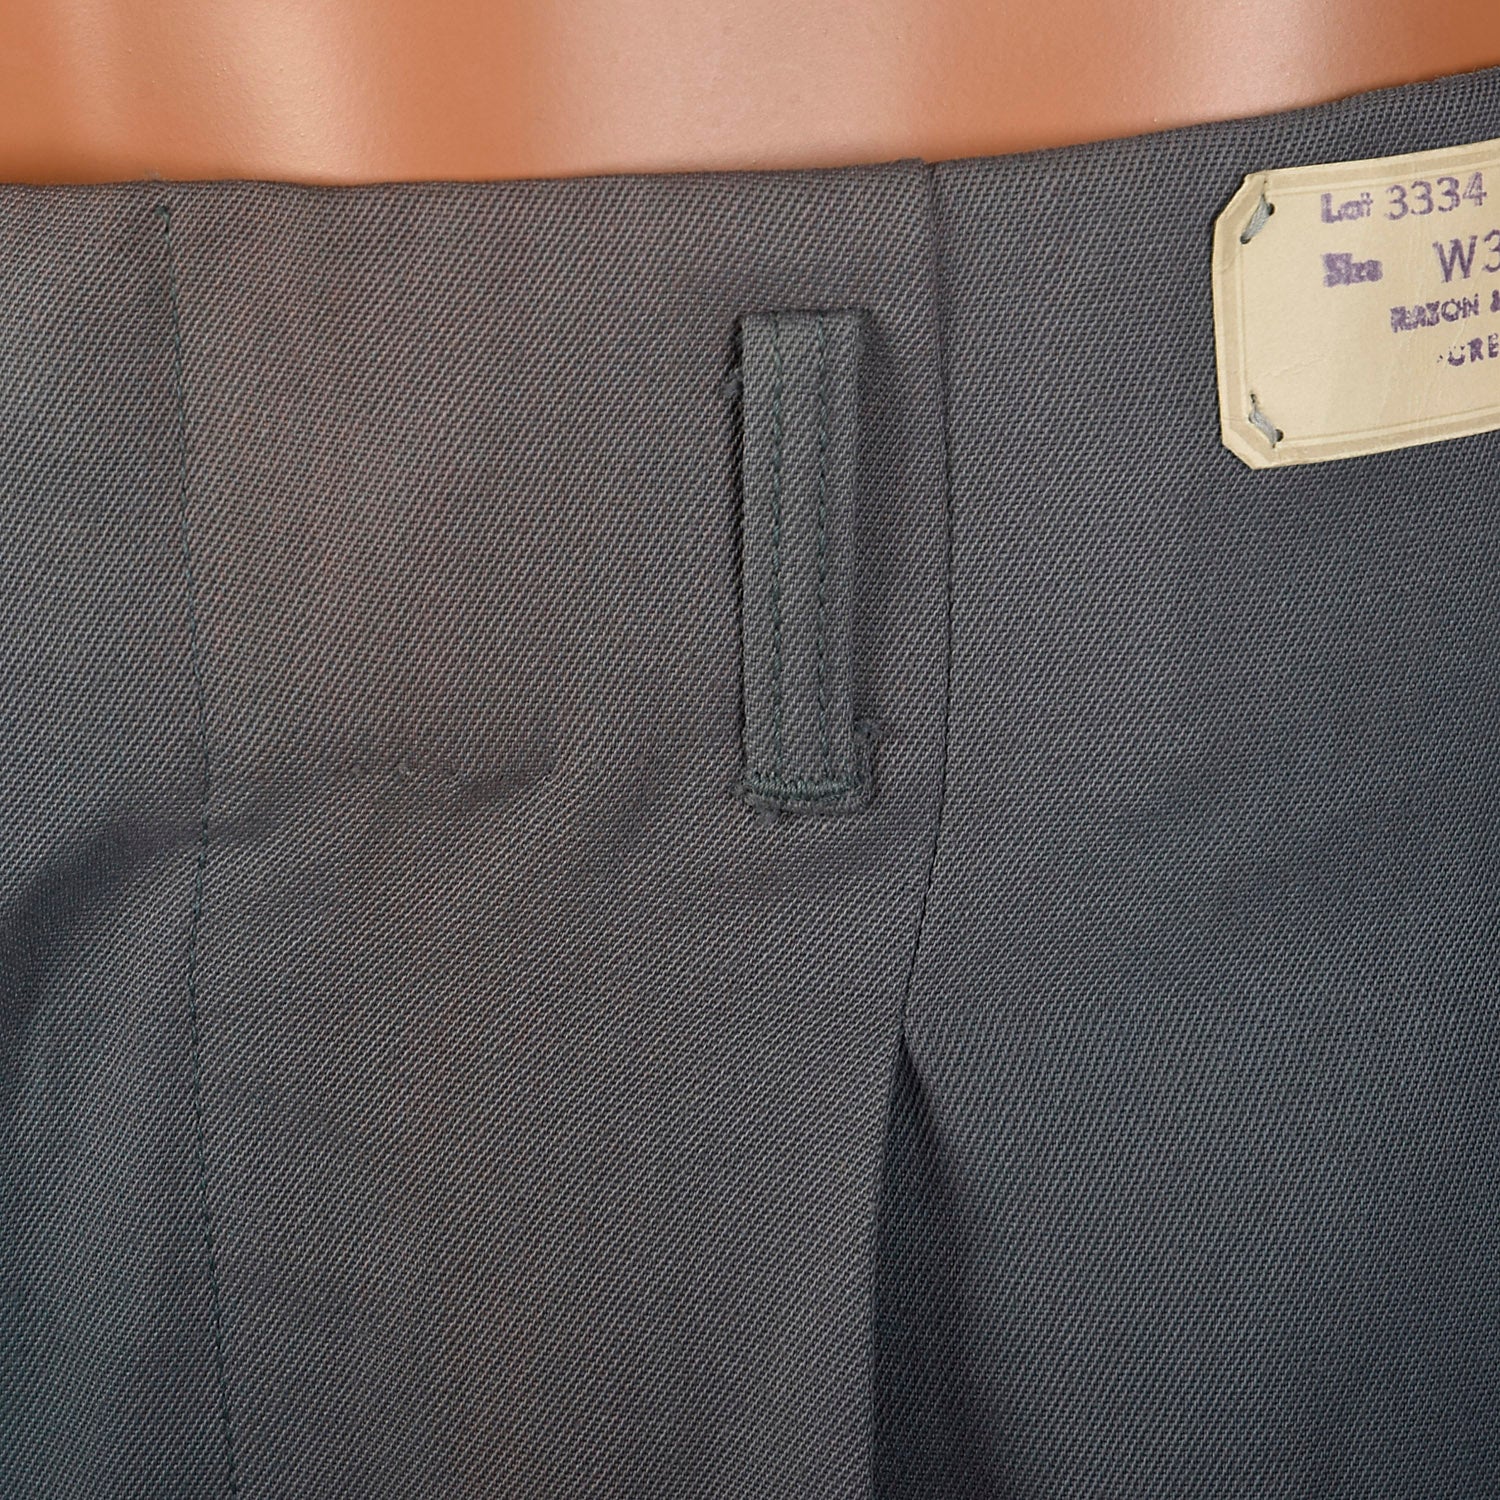 Large 1950s Hollywood Waist Blue Pants